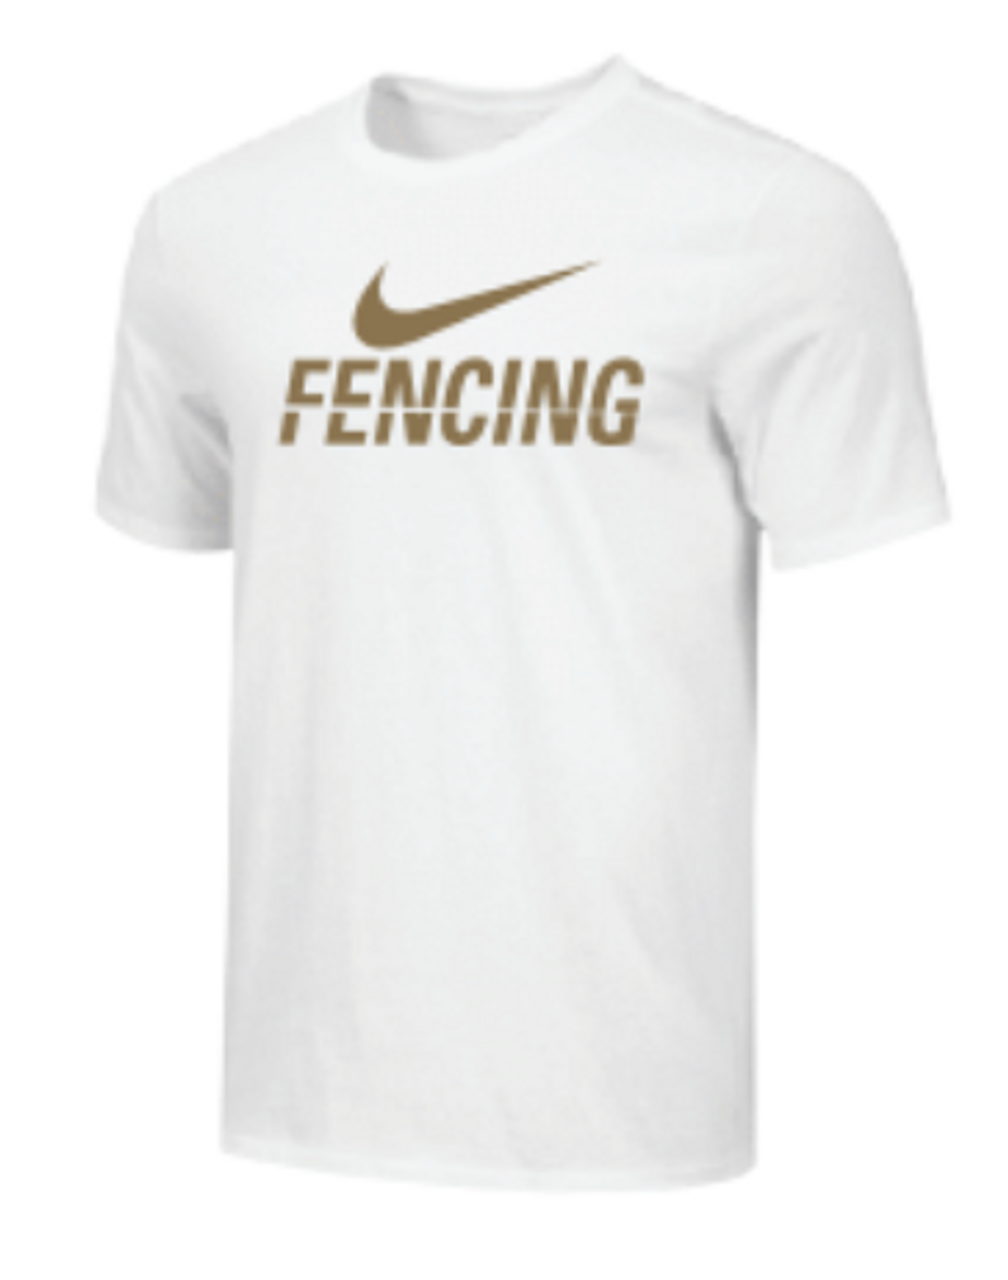 Geografía expedido hígado Nike Men's Fencing Tee - Gold/White